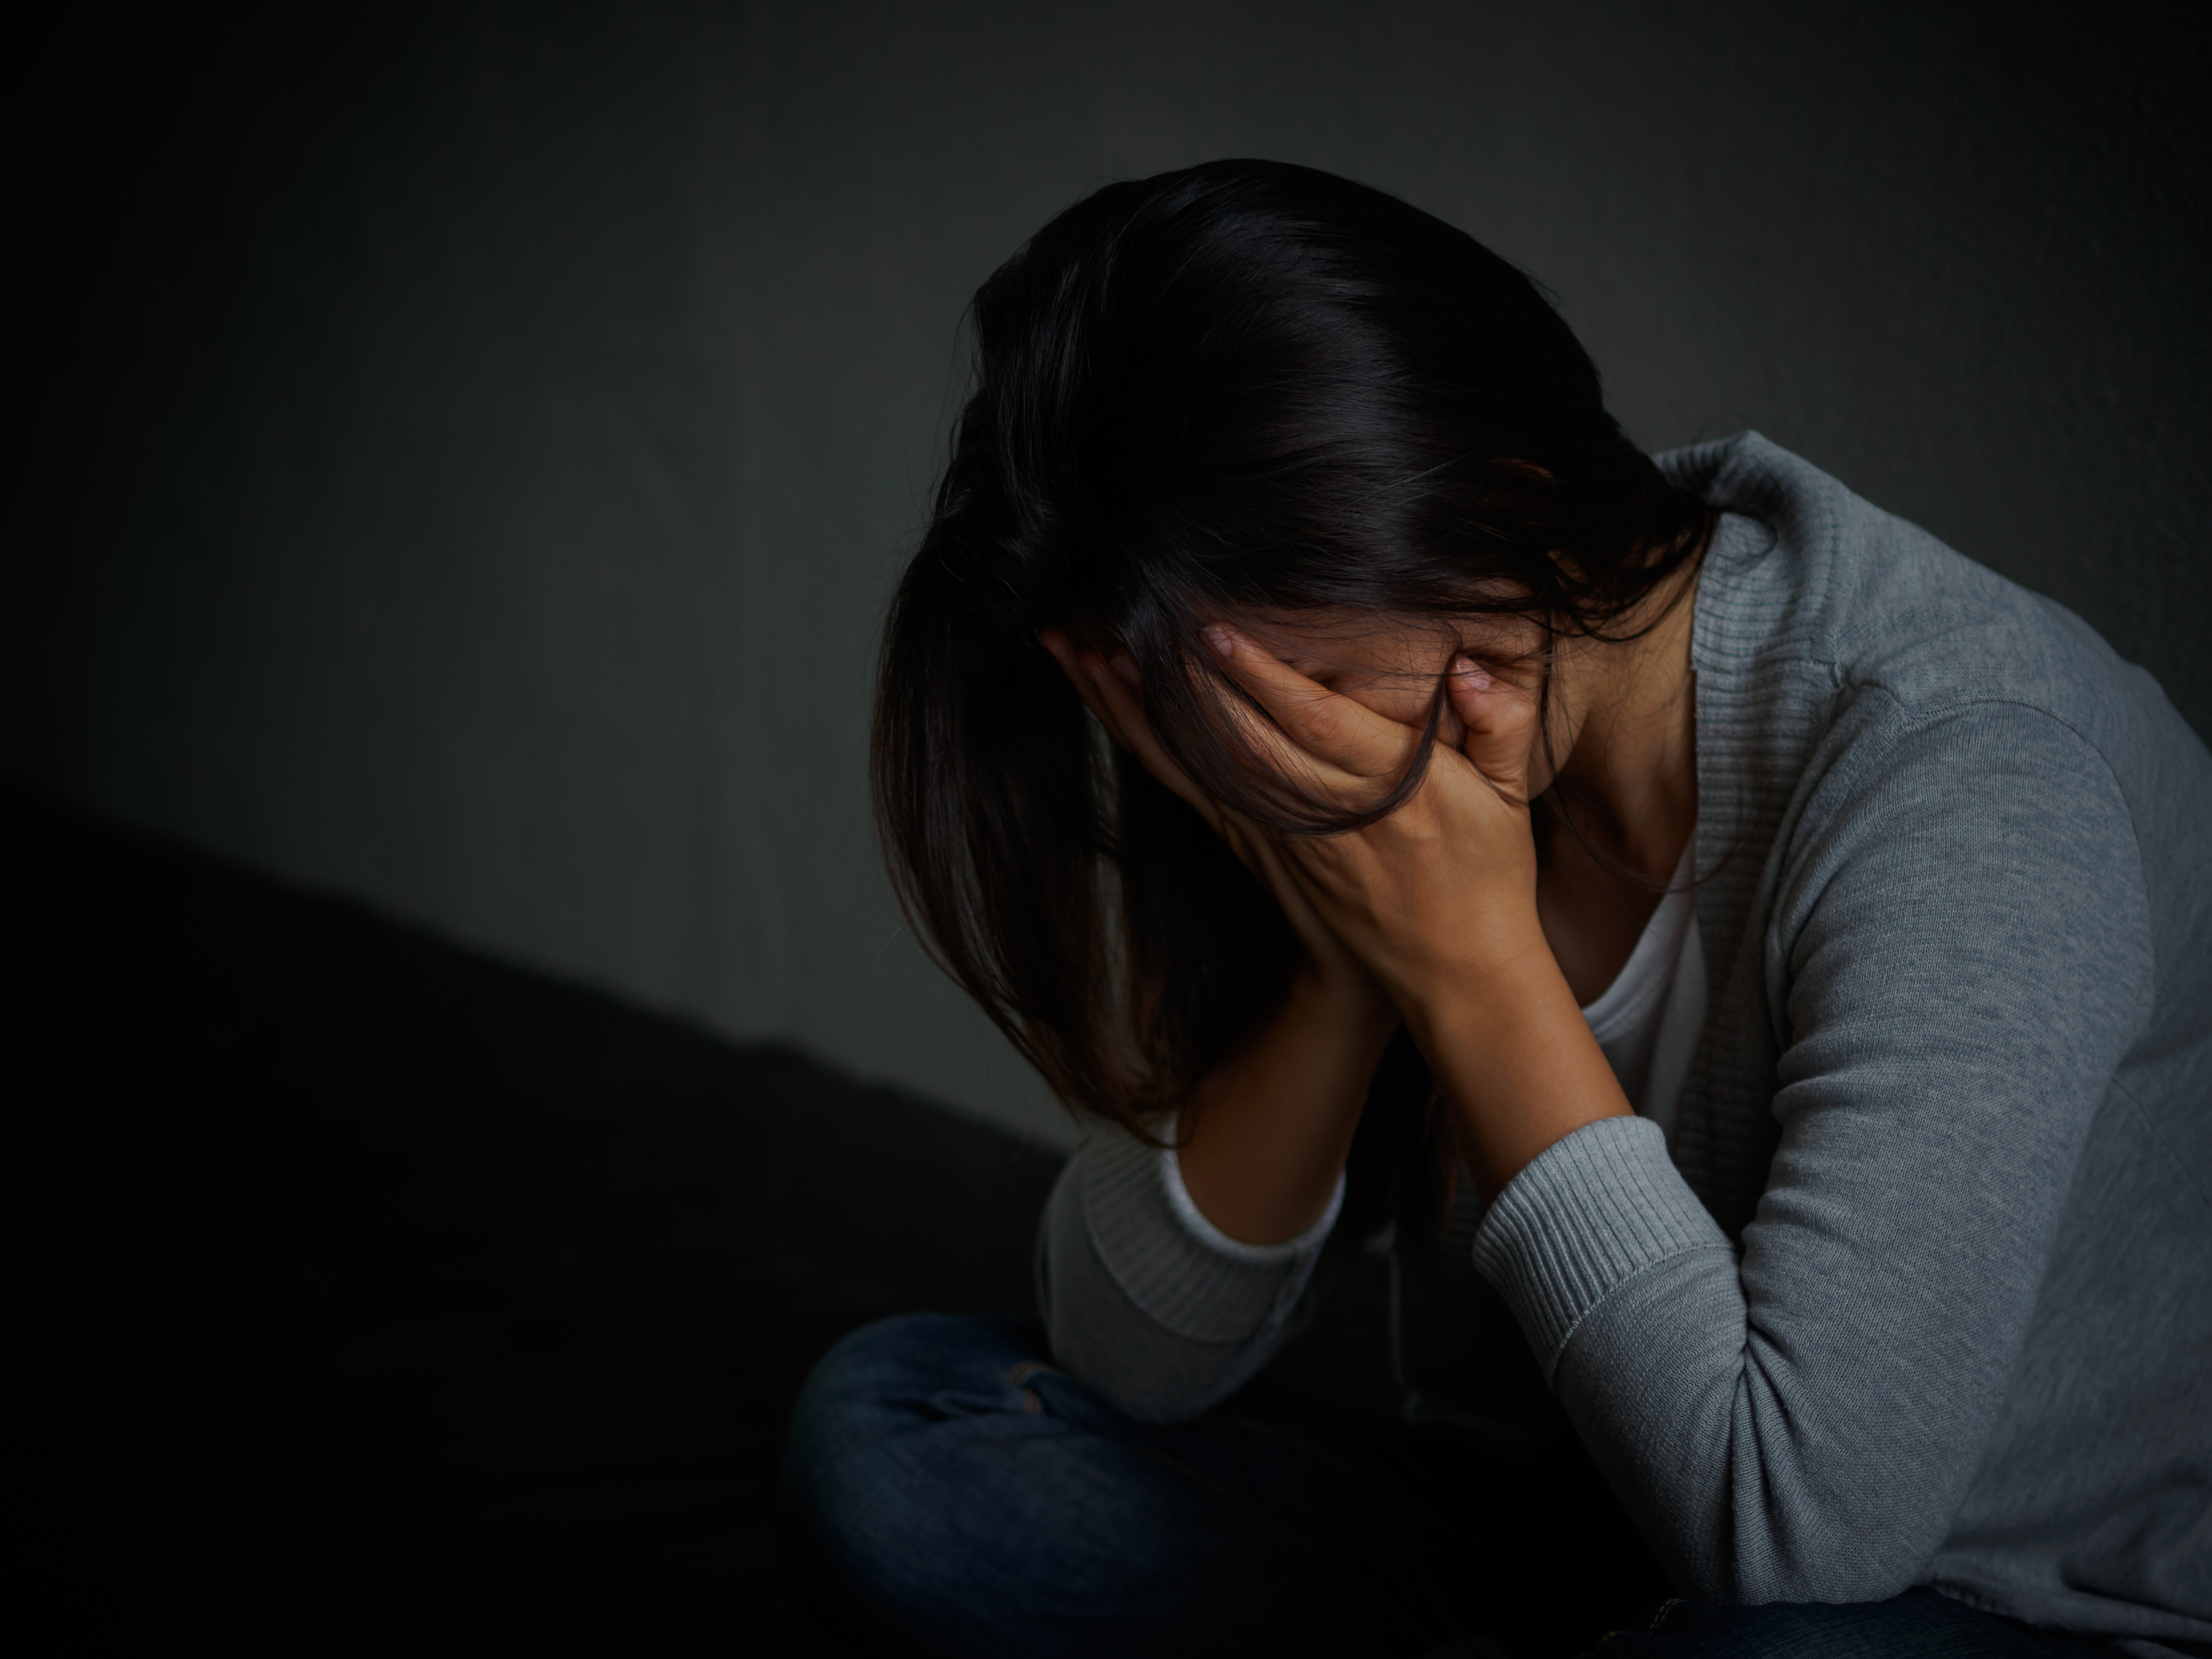 Sad woman | Source: Shutterstock